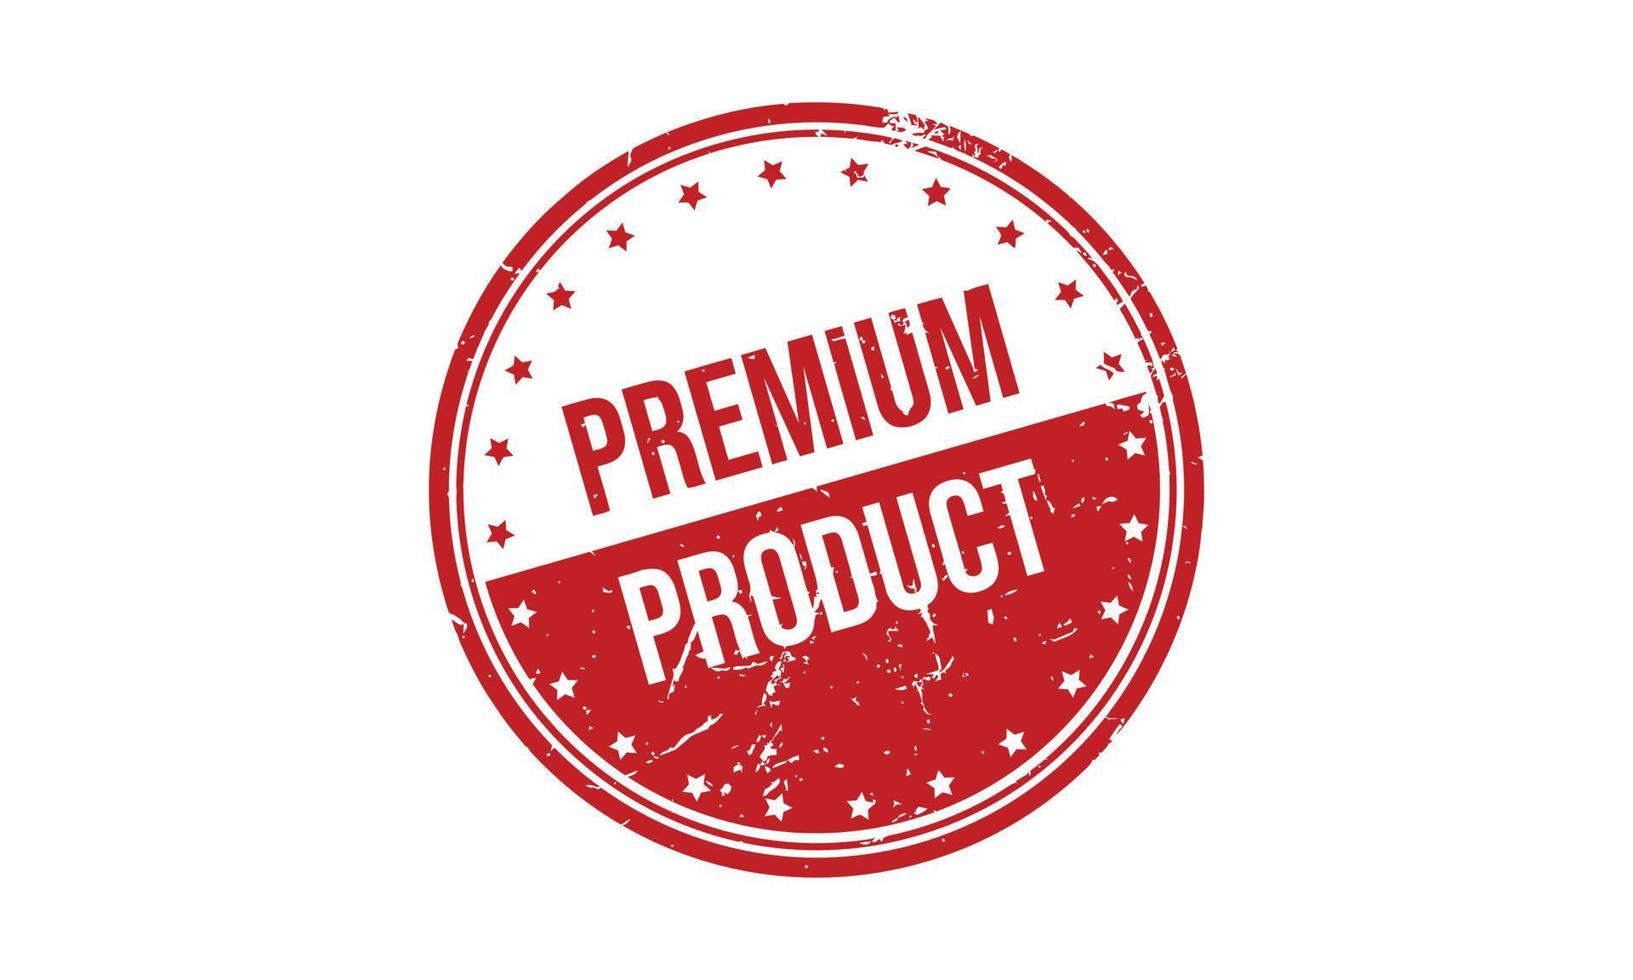 Premium Product Rubber Grunge Stamp Seal Vector Illustration